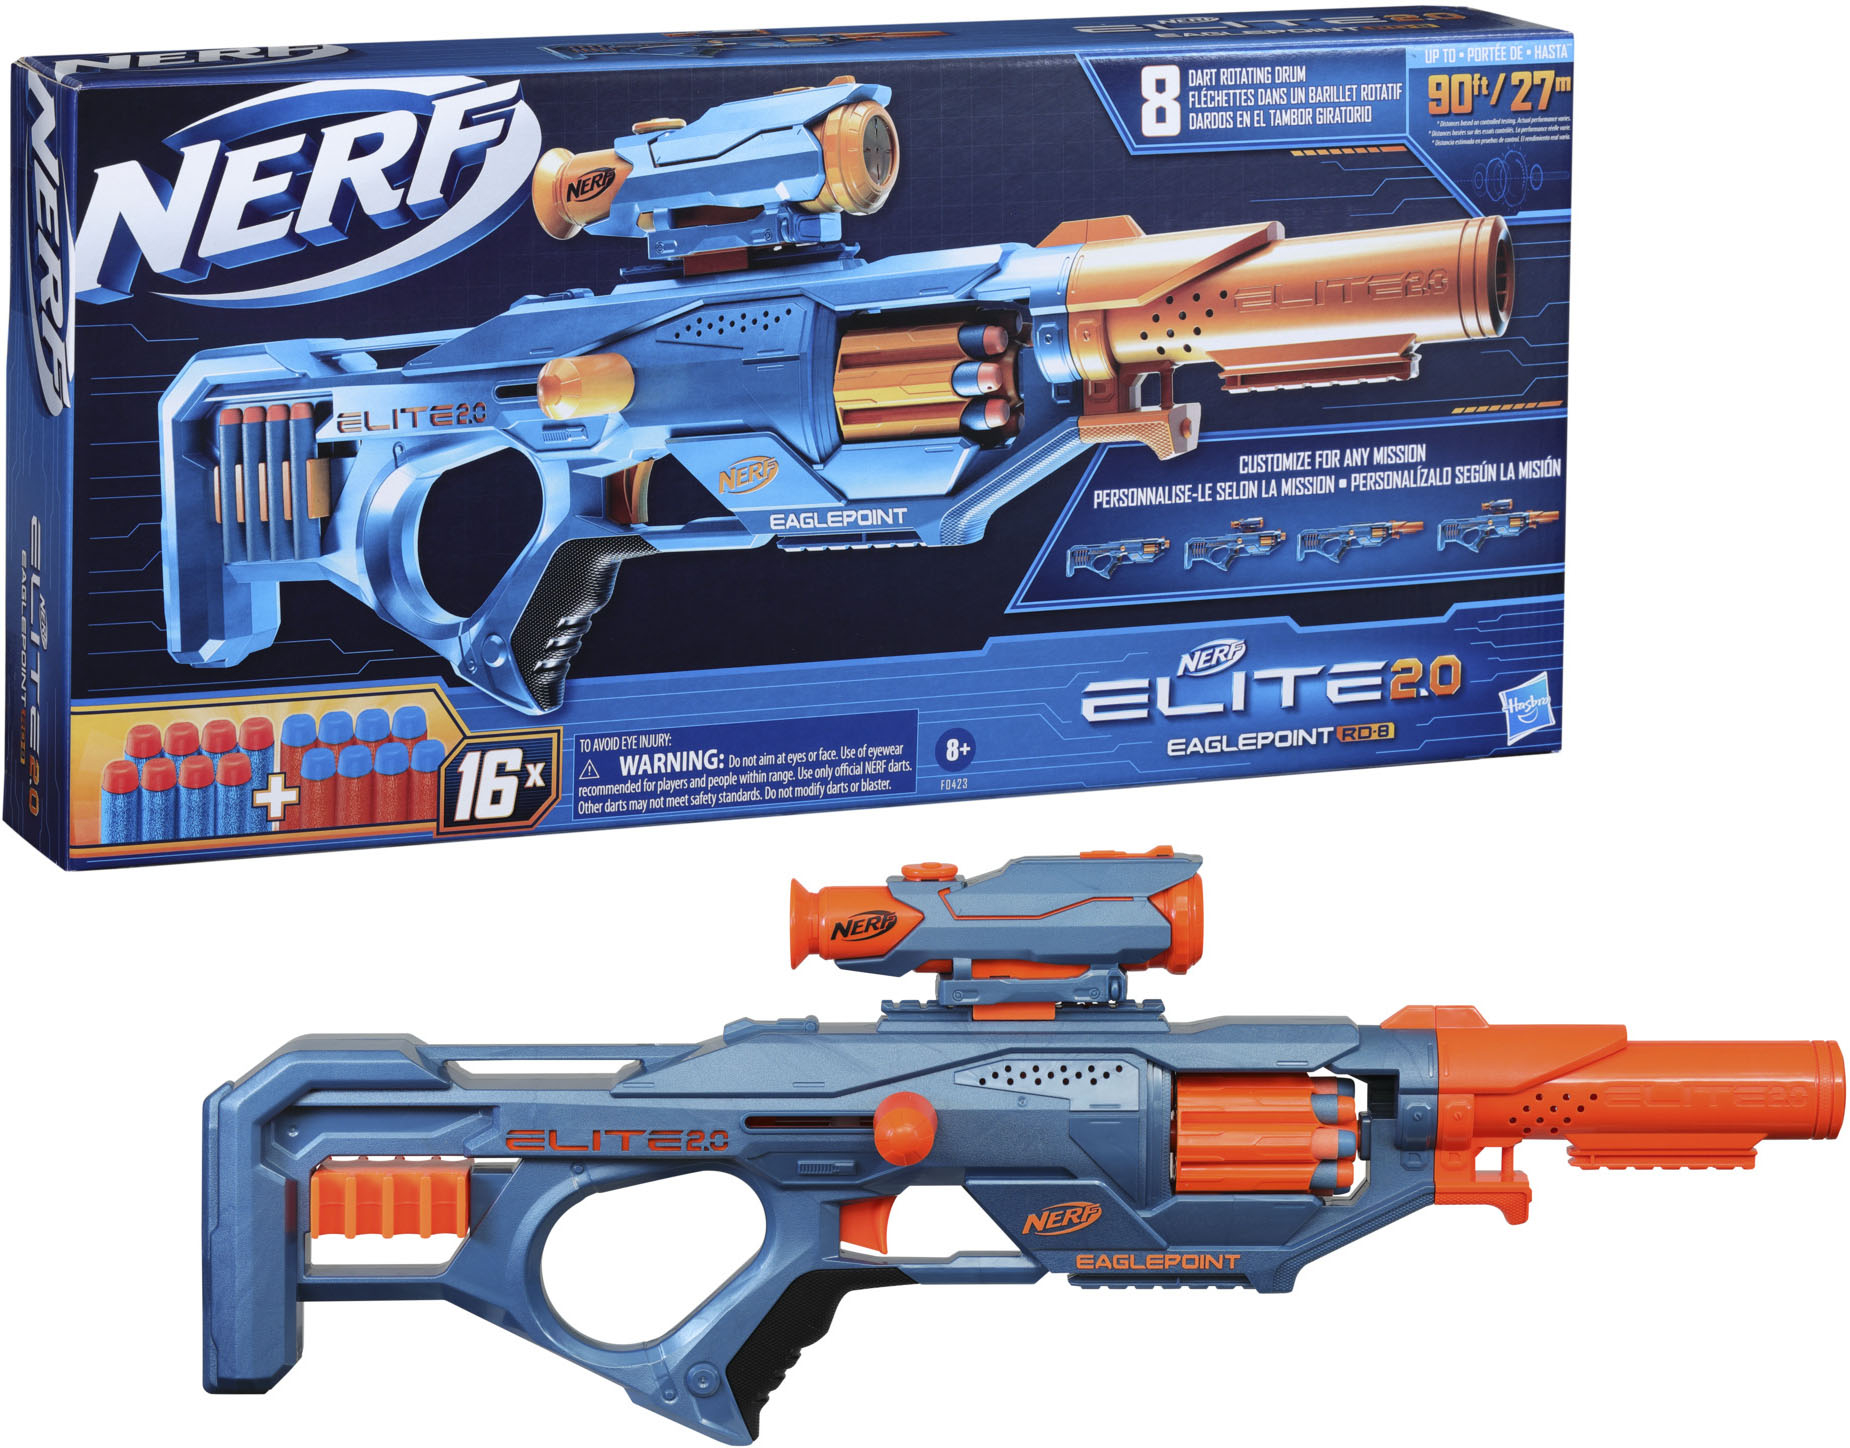 NERF Elite 2.0 Tactical Blaster Set, 3 Blasters and 20 Darts 